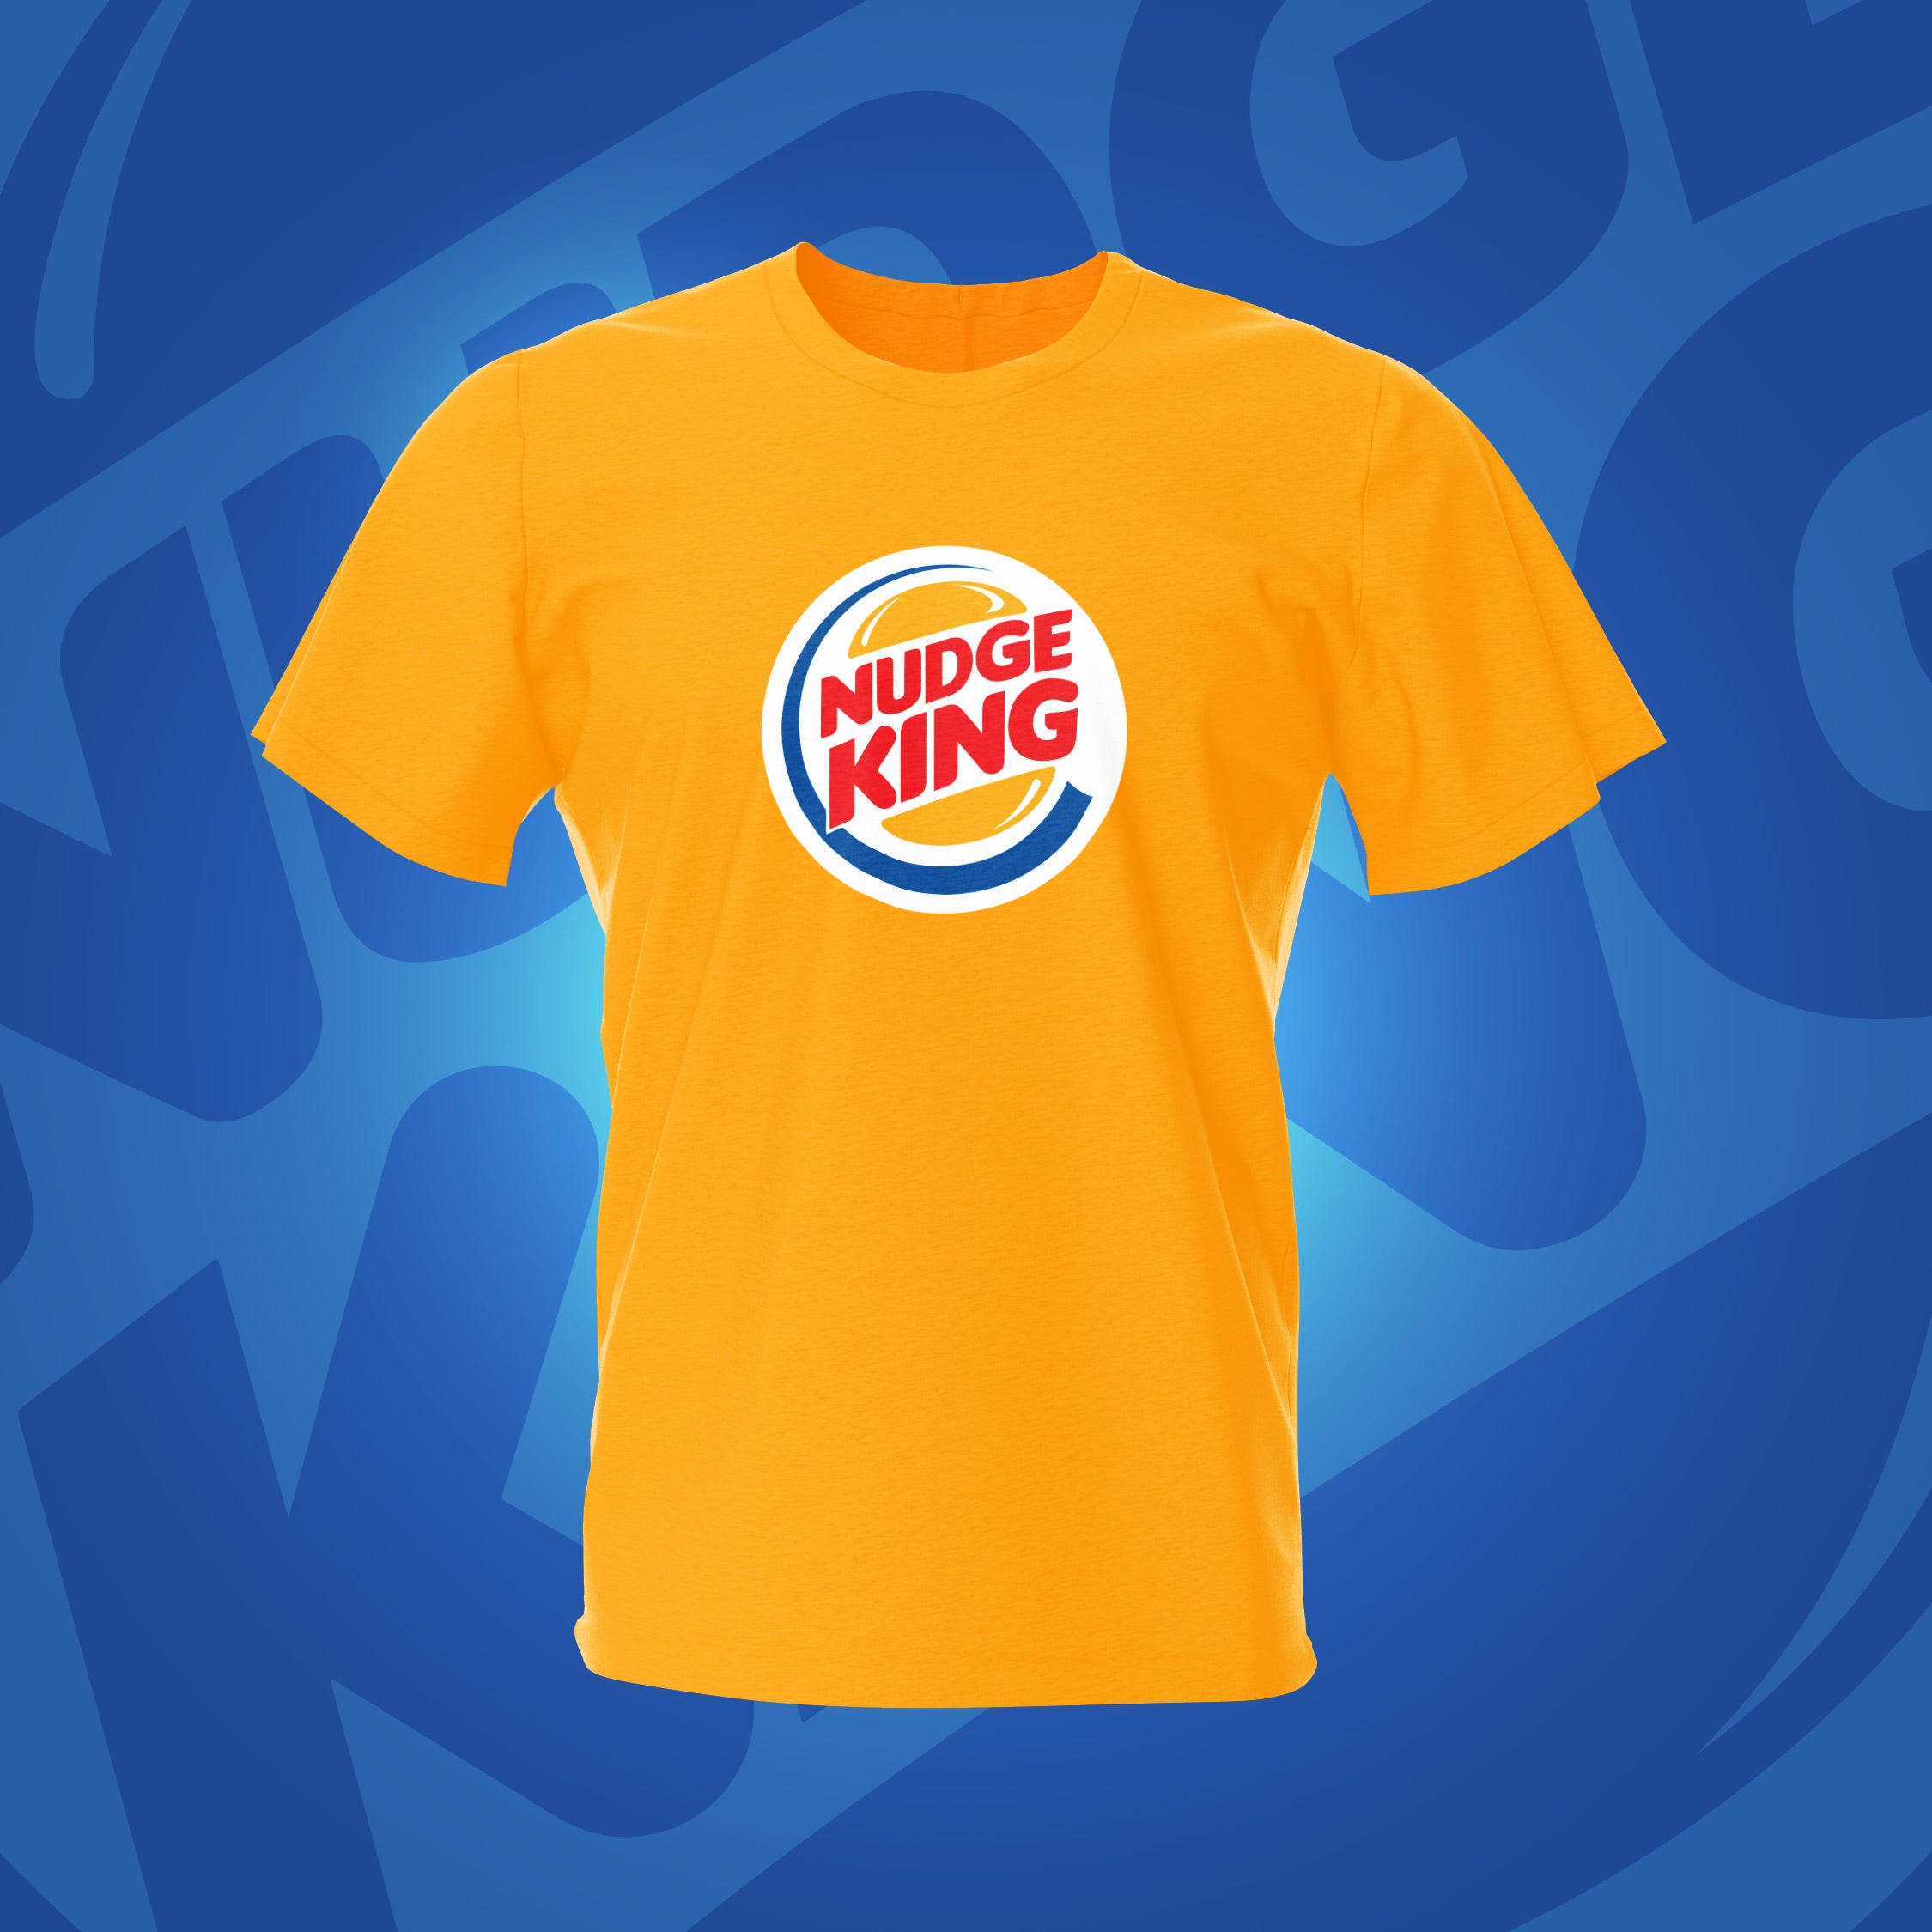 Nudge King T-Shirt